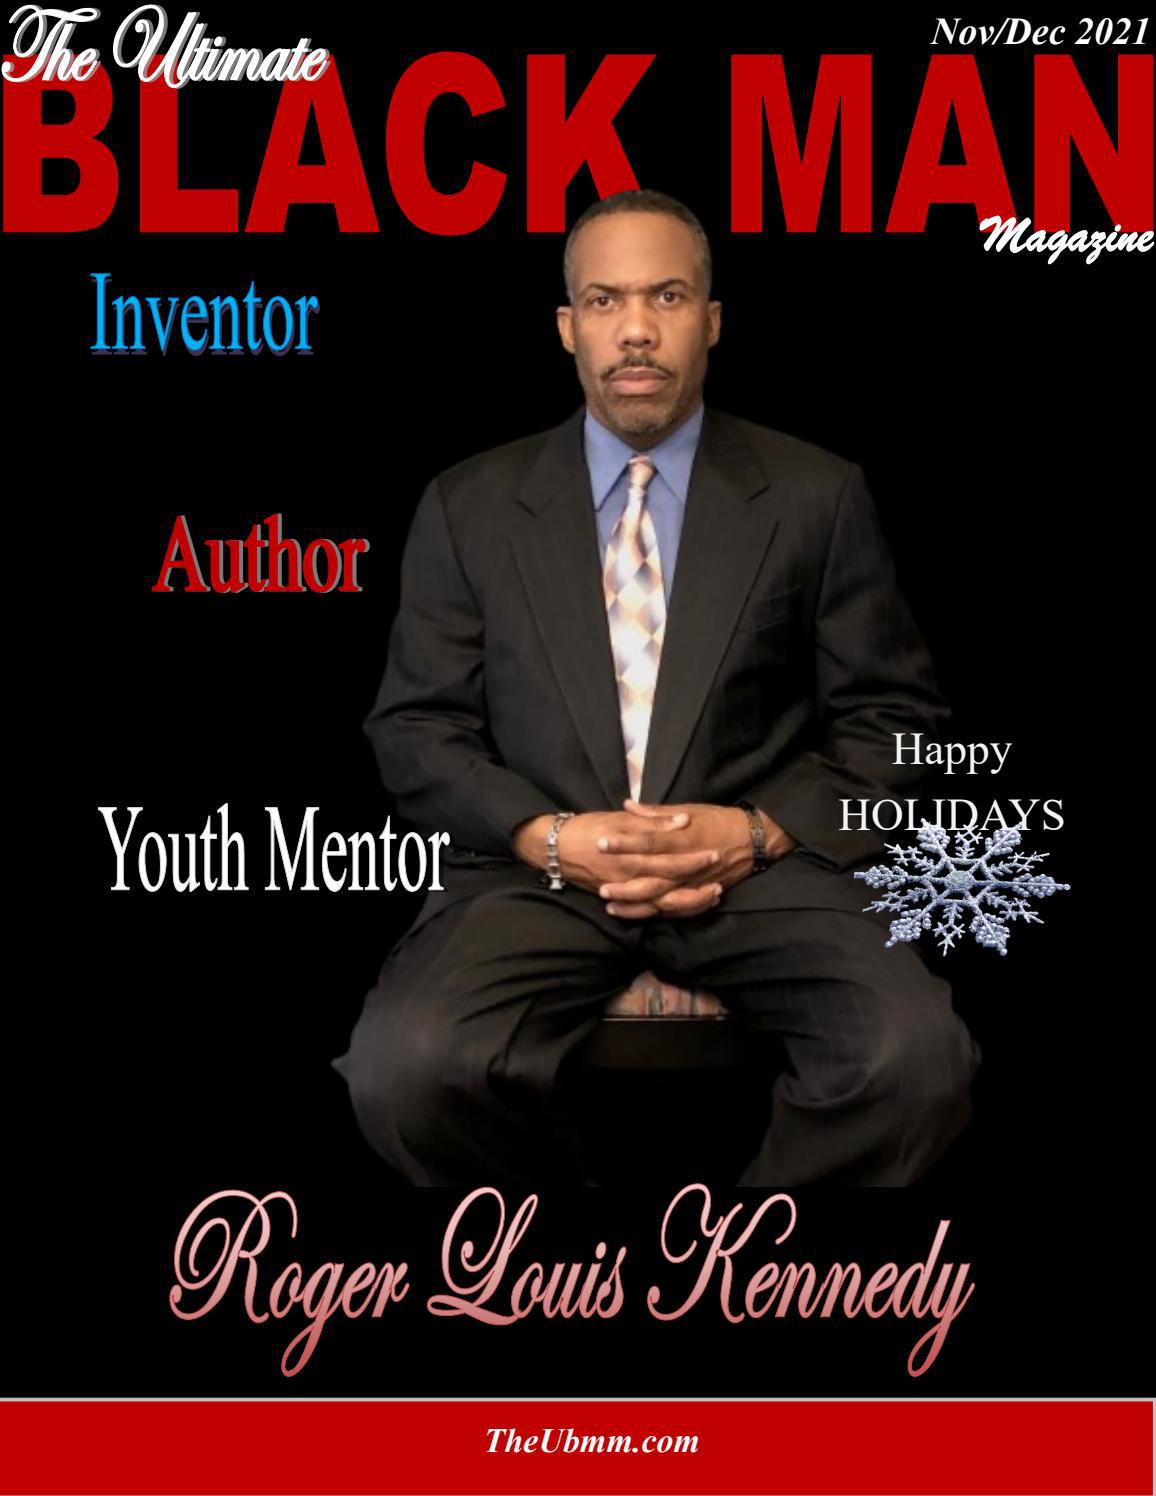 The Ultimate Black Man Magazine, November-December 2021